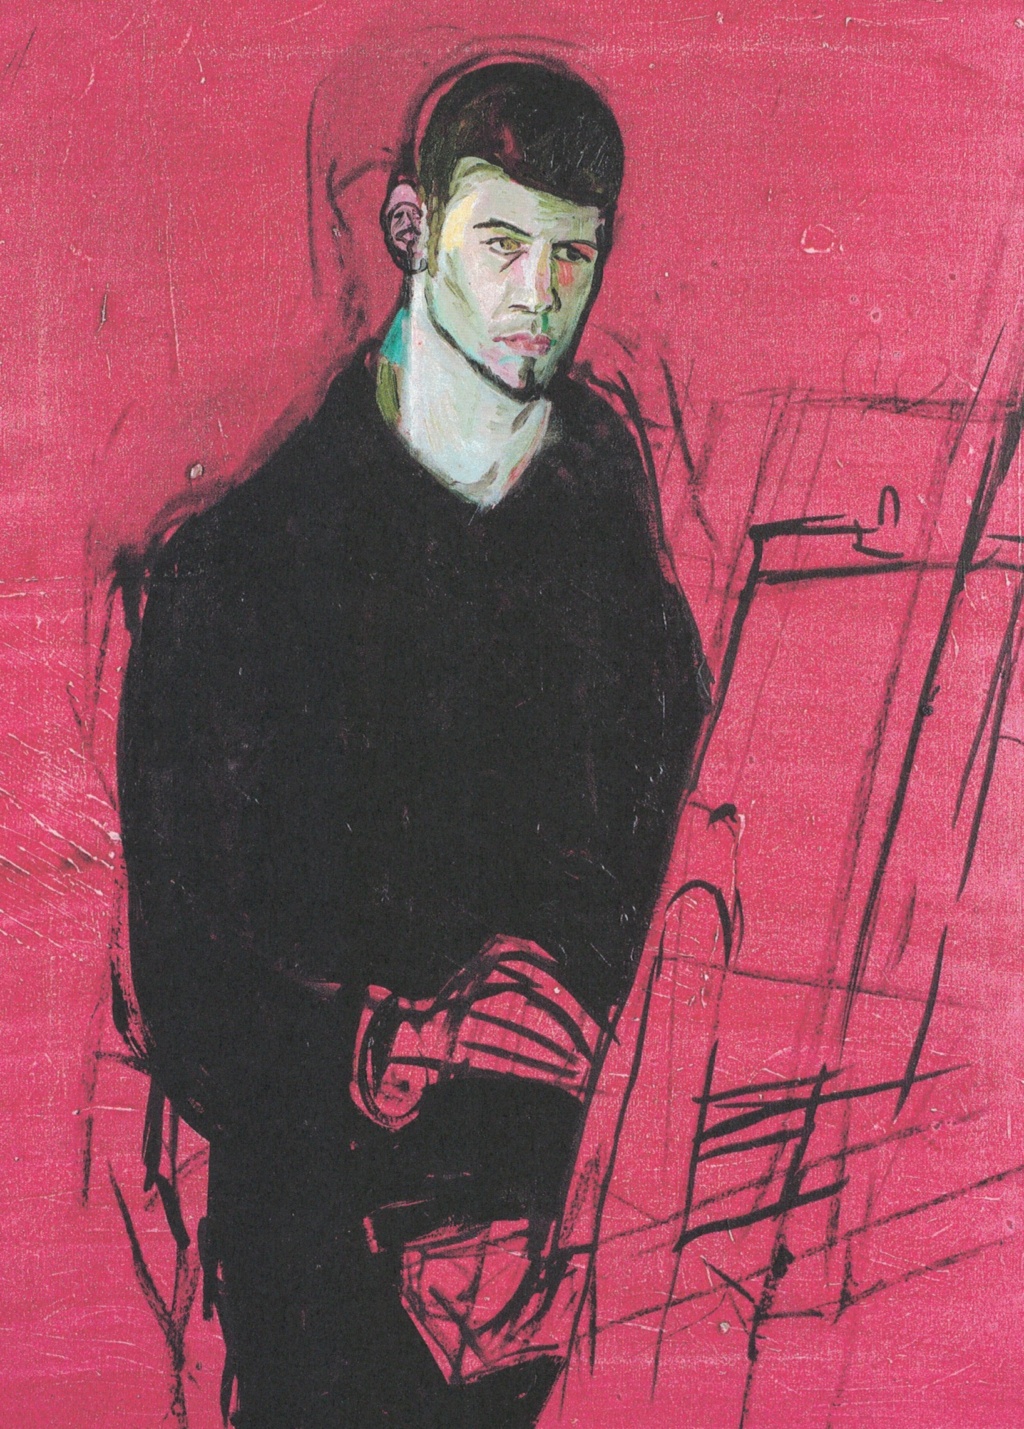 Balz Baechi, A.H. malt sich selbst, 1998
